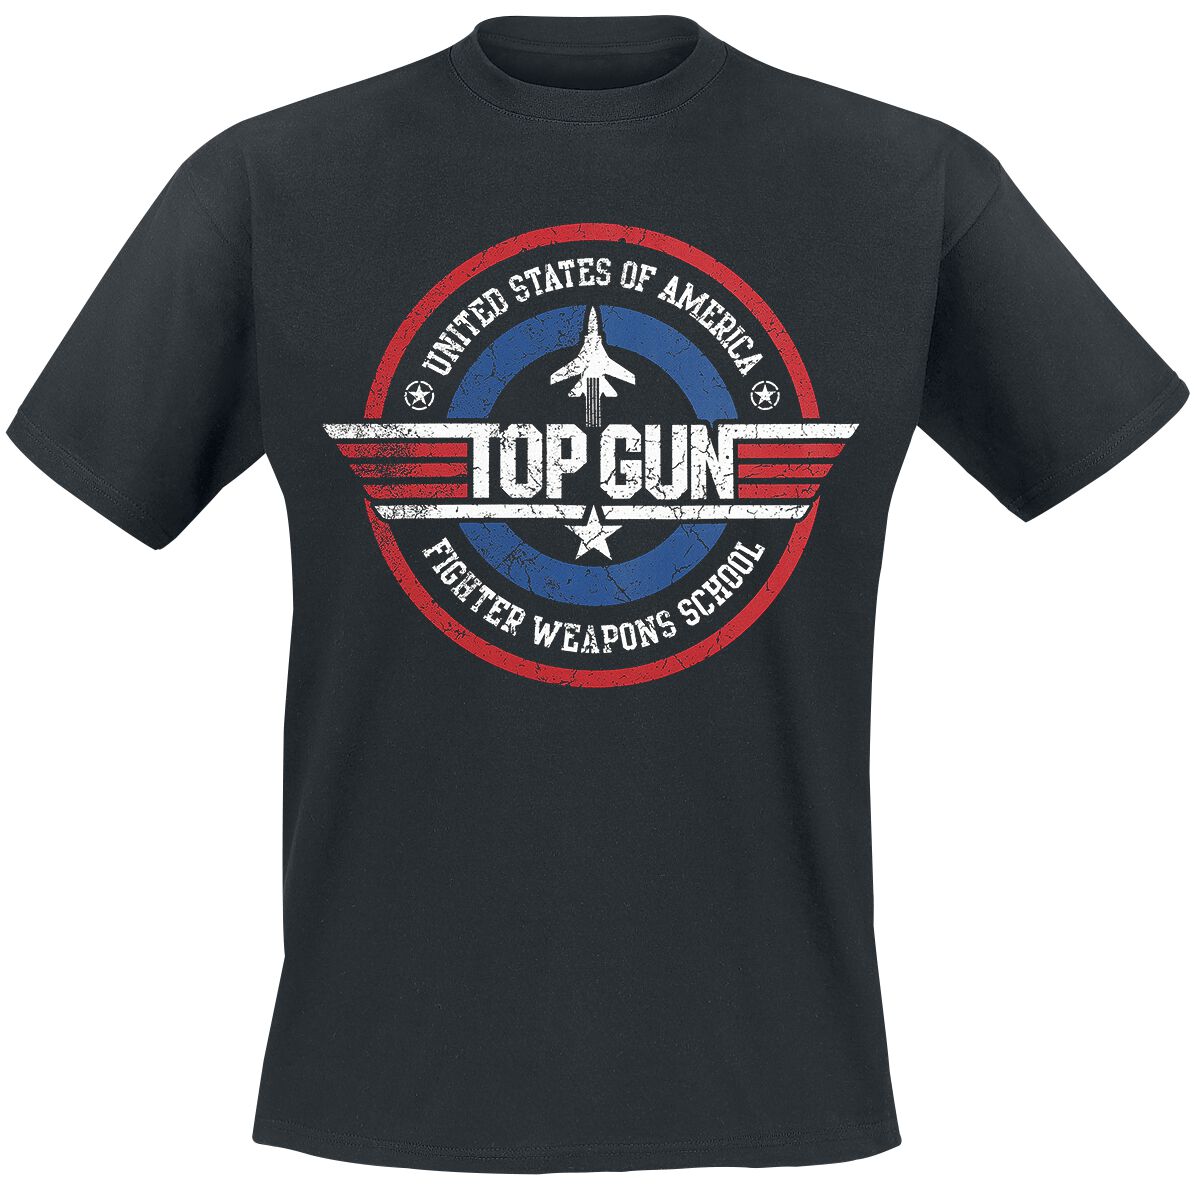 Top Gun Fighter Weapons School T-Shirt black